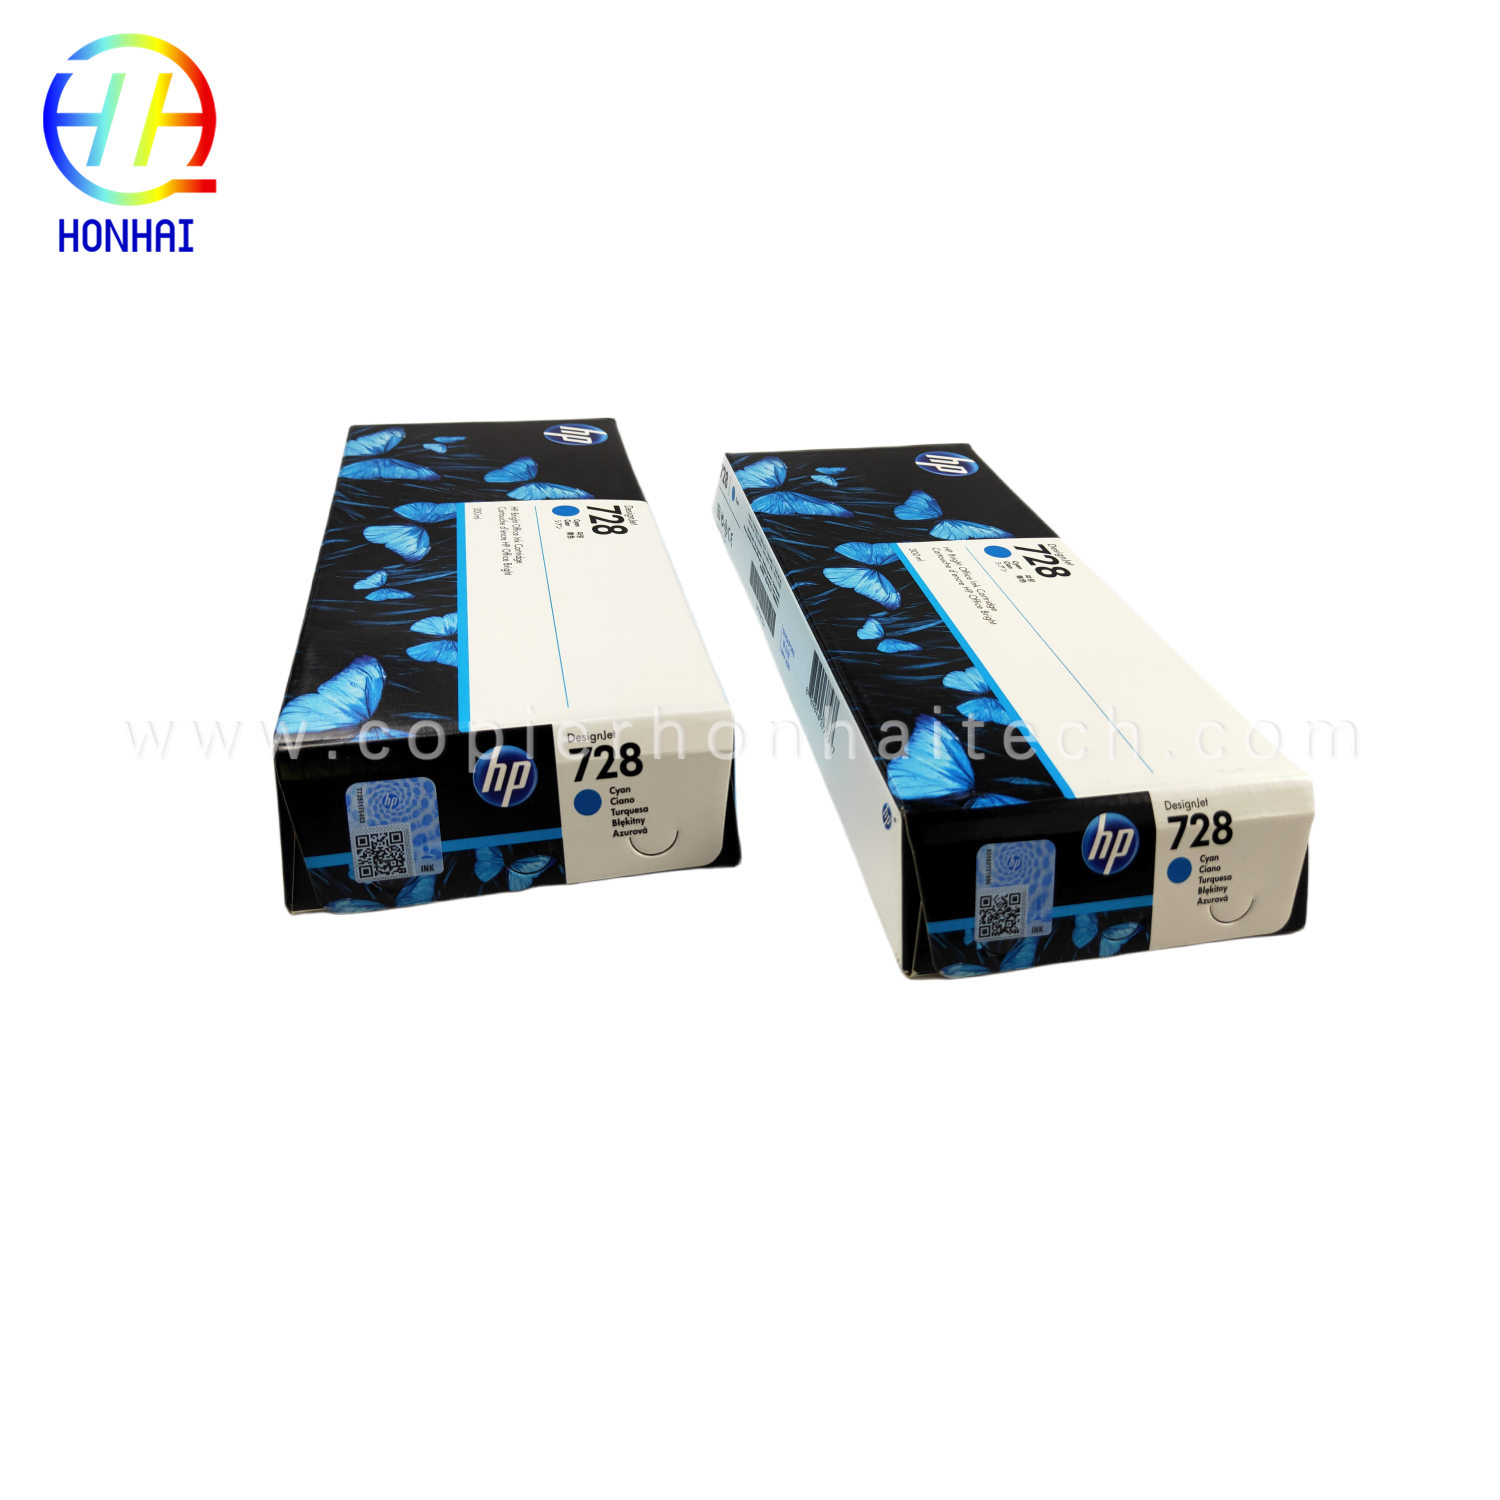 https://www.copierhonhaitech.com/original-new-ink-cartridge-cyan-for-hp-designjet-t730-and-t830-large-format-plotter-printers-and-hp-729-designjet-printhead- 728-f9k17a-ምርት/